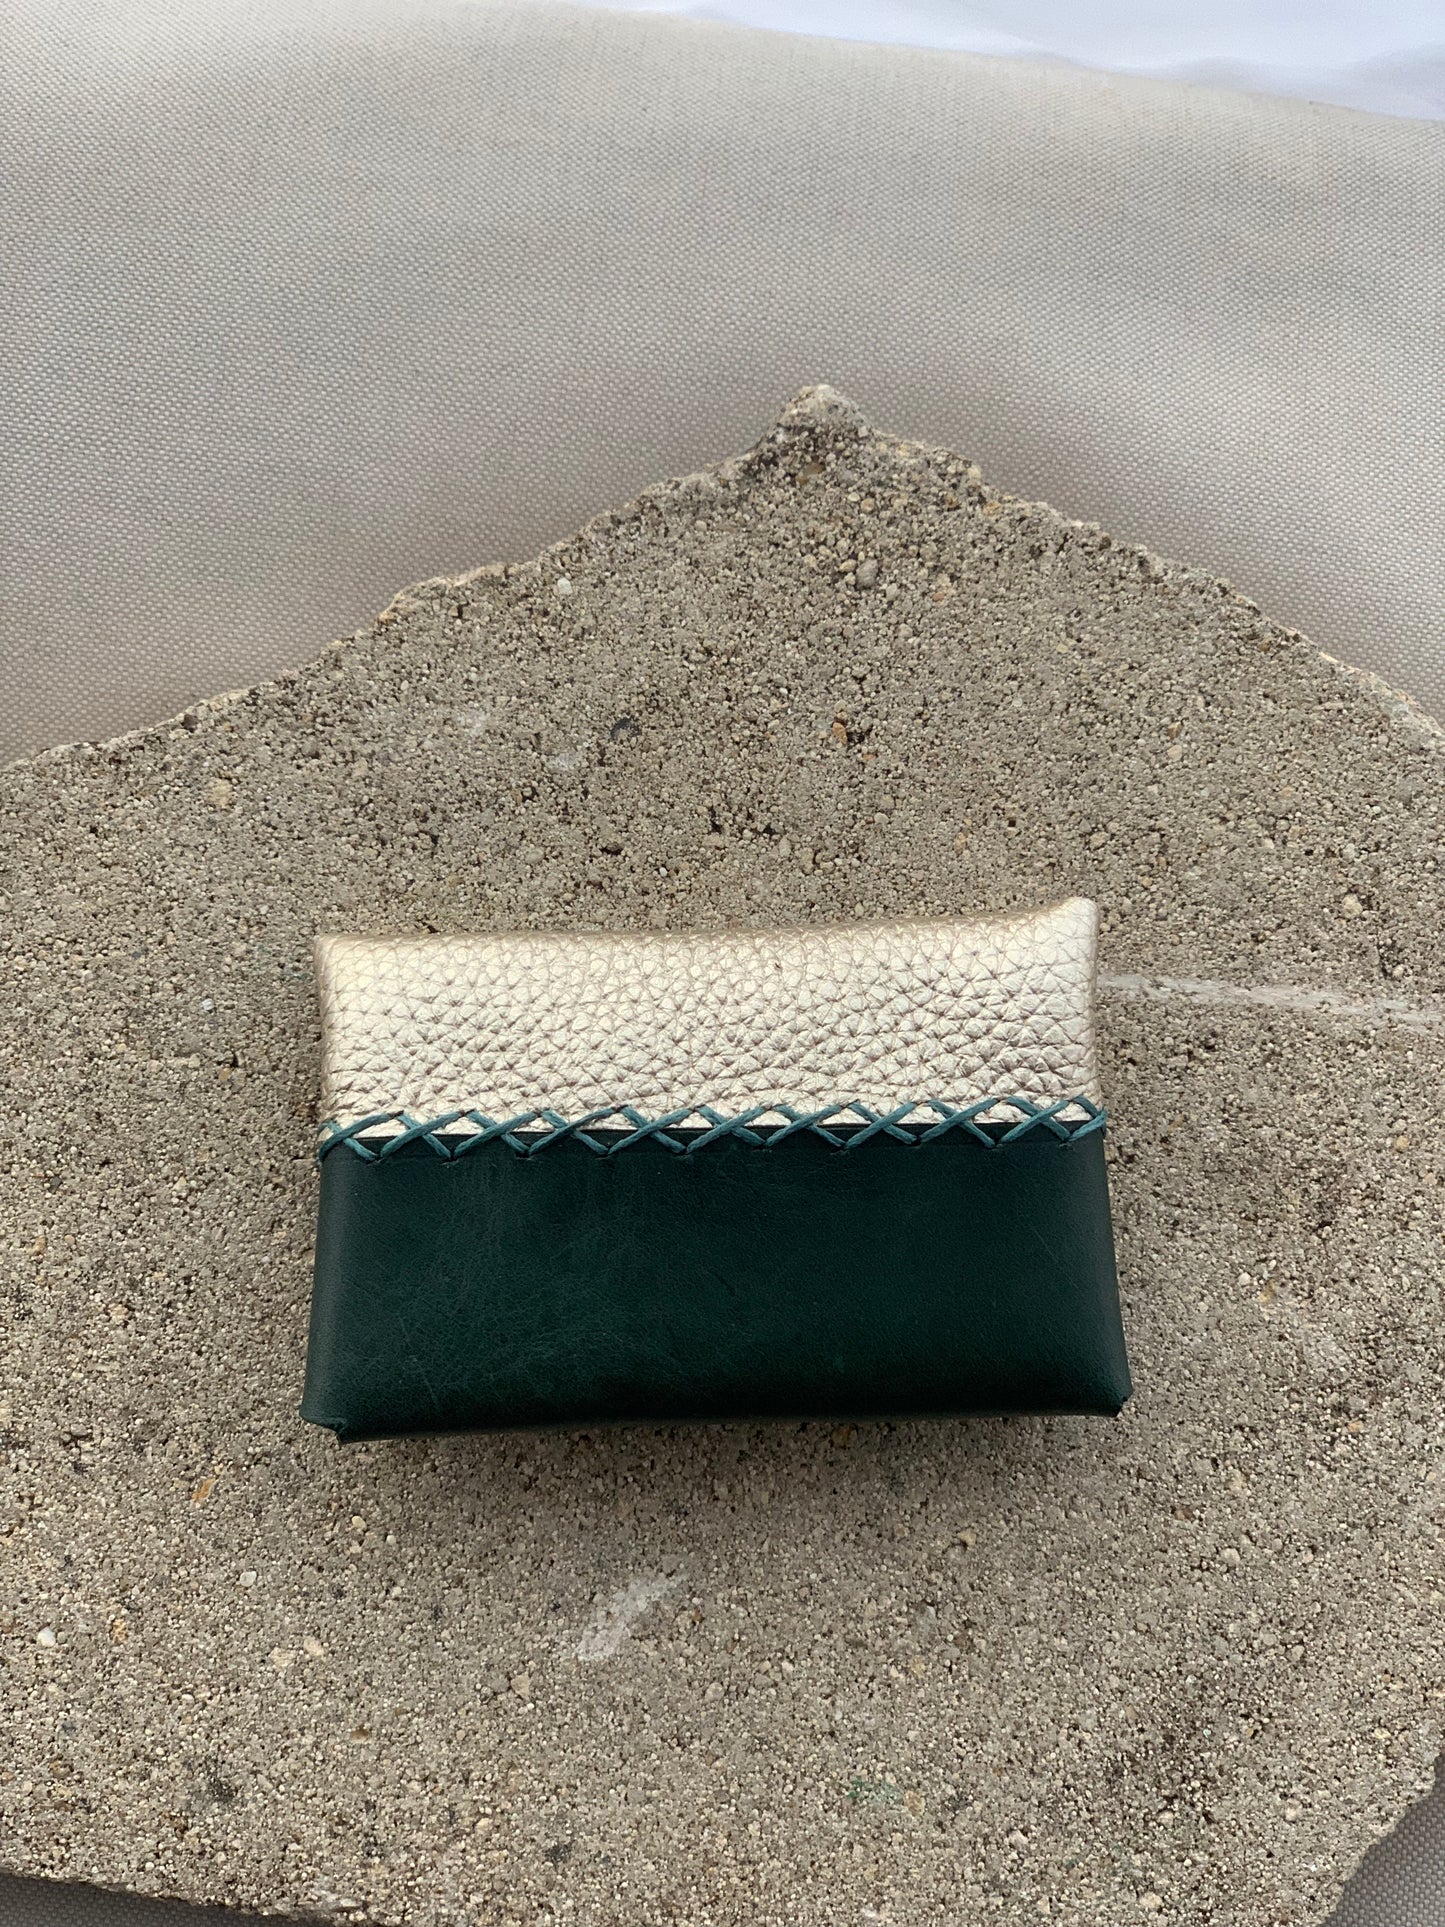 Gold & green wallet